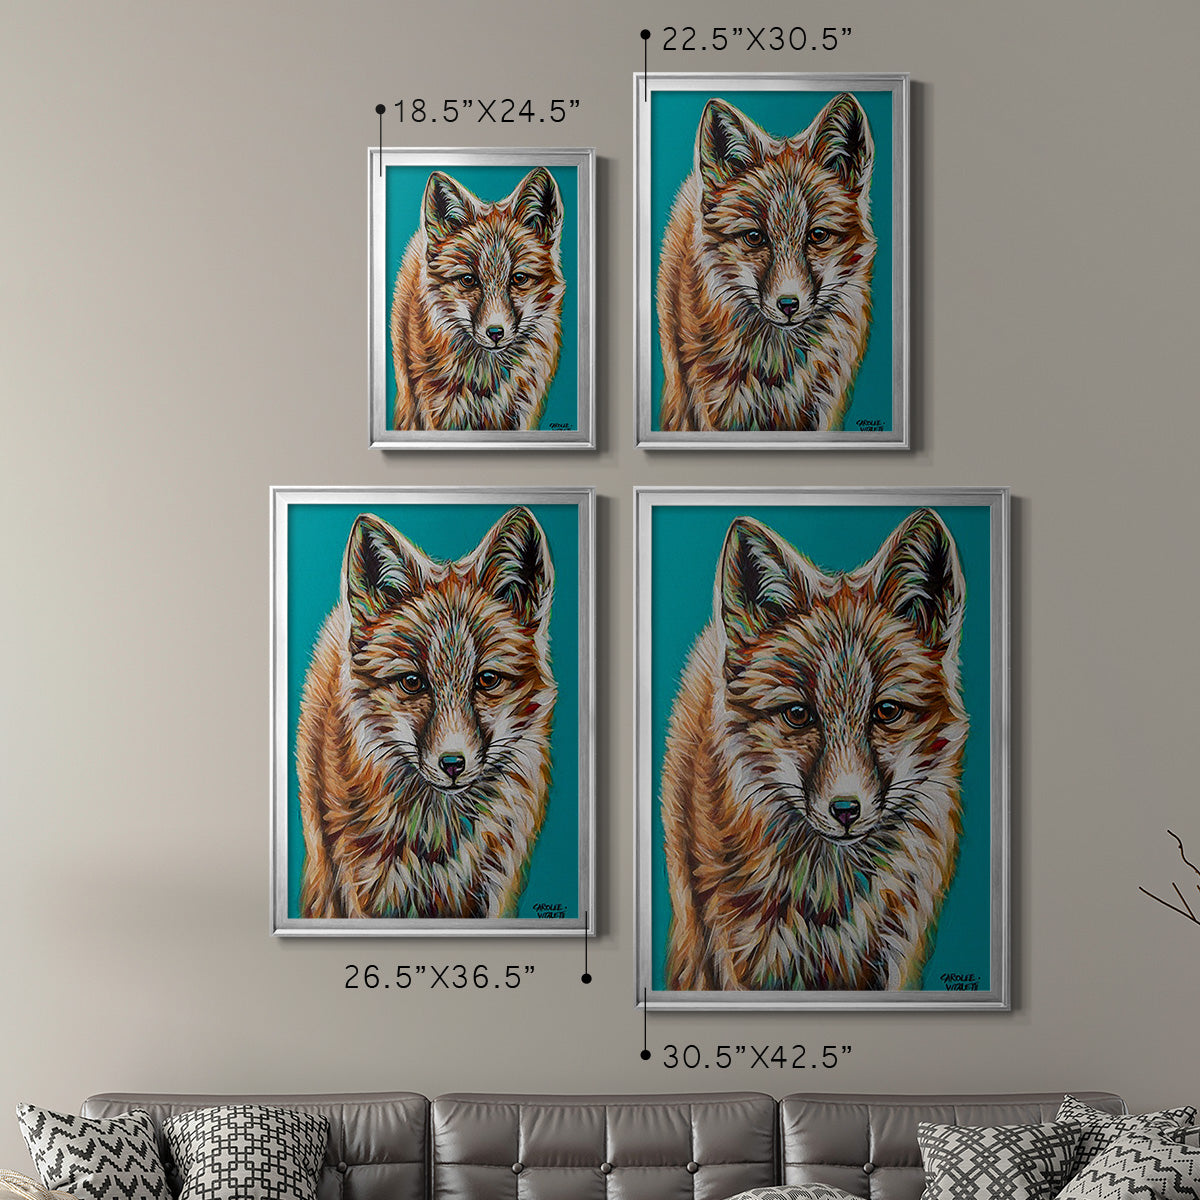 Teal Fox Premium Framed Print - Ready to Hang